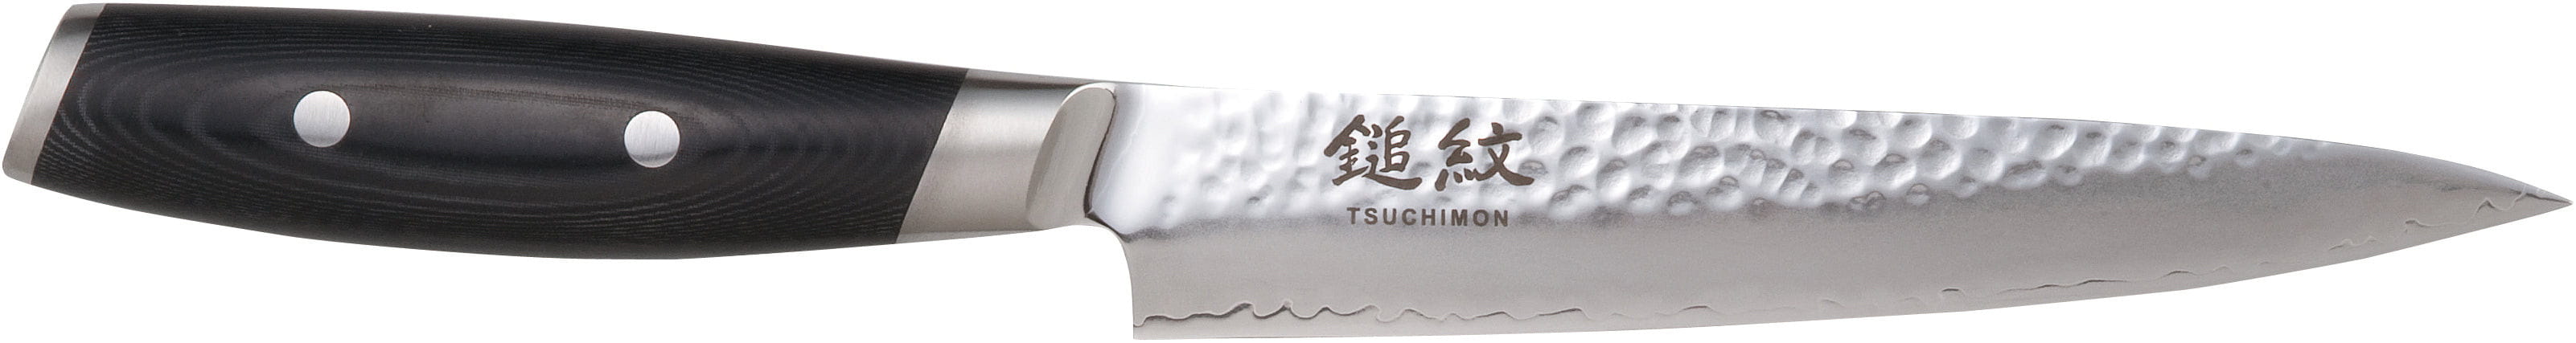 Yaxell Tsuchimon Curving Couteau, 18 cm